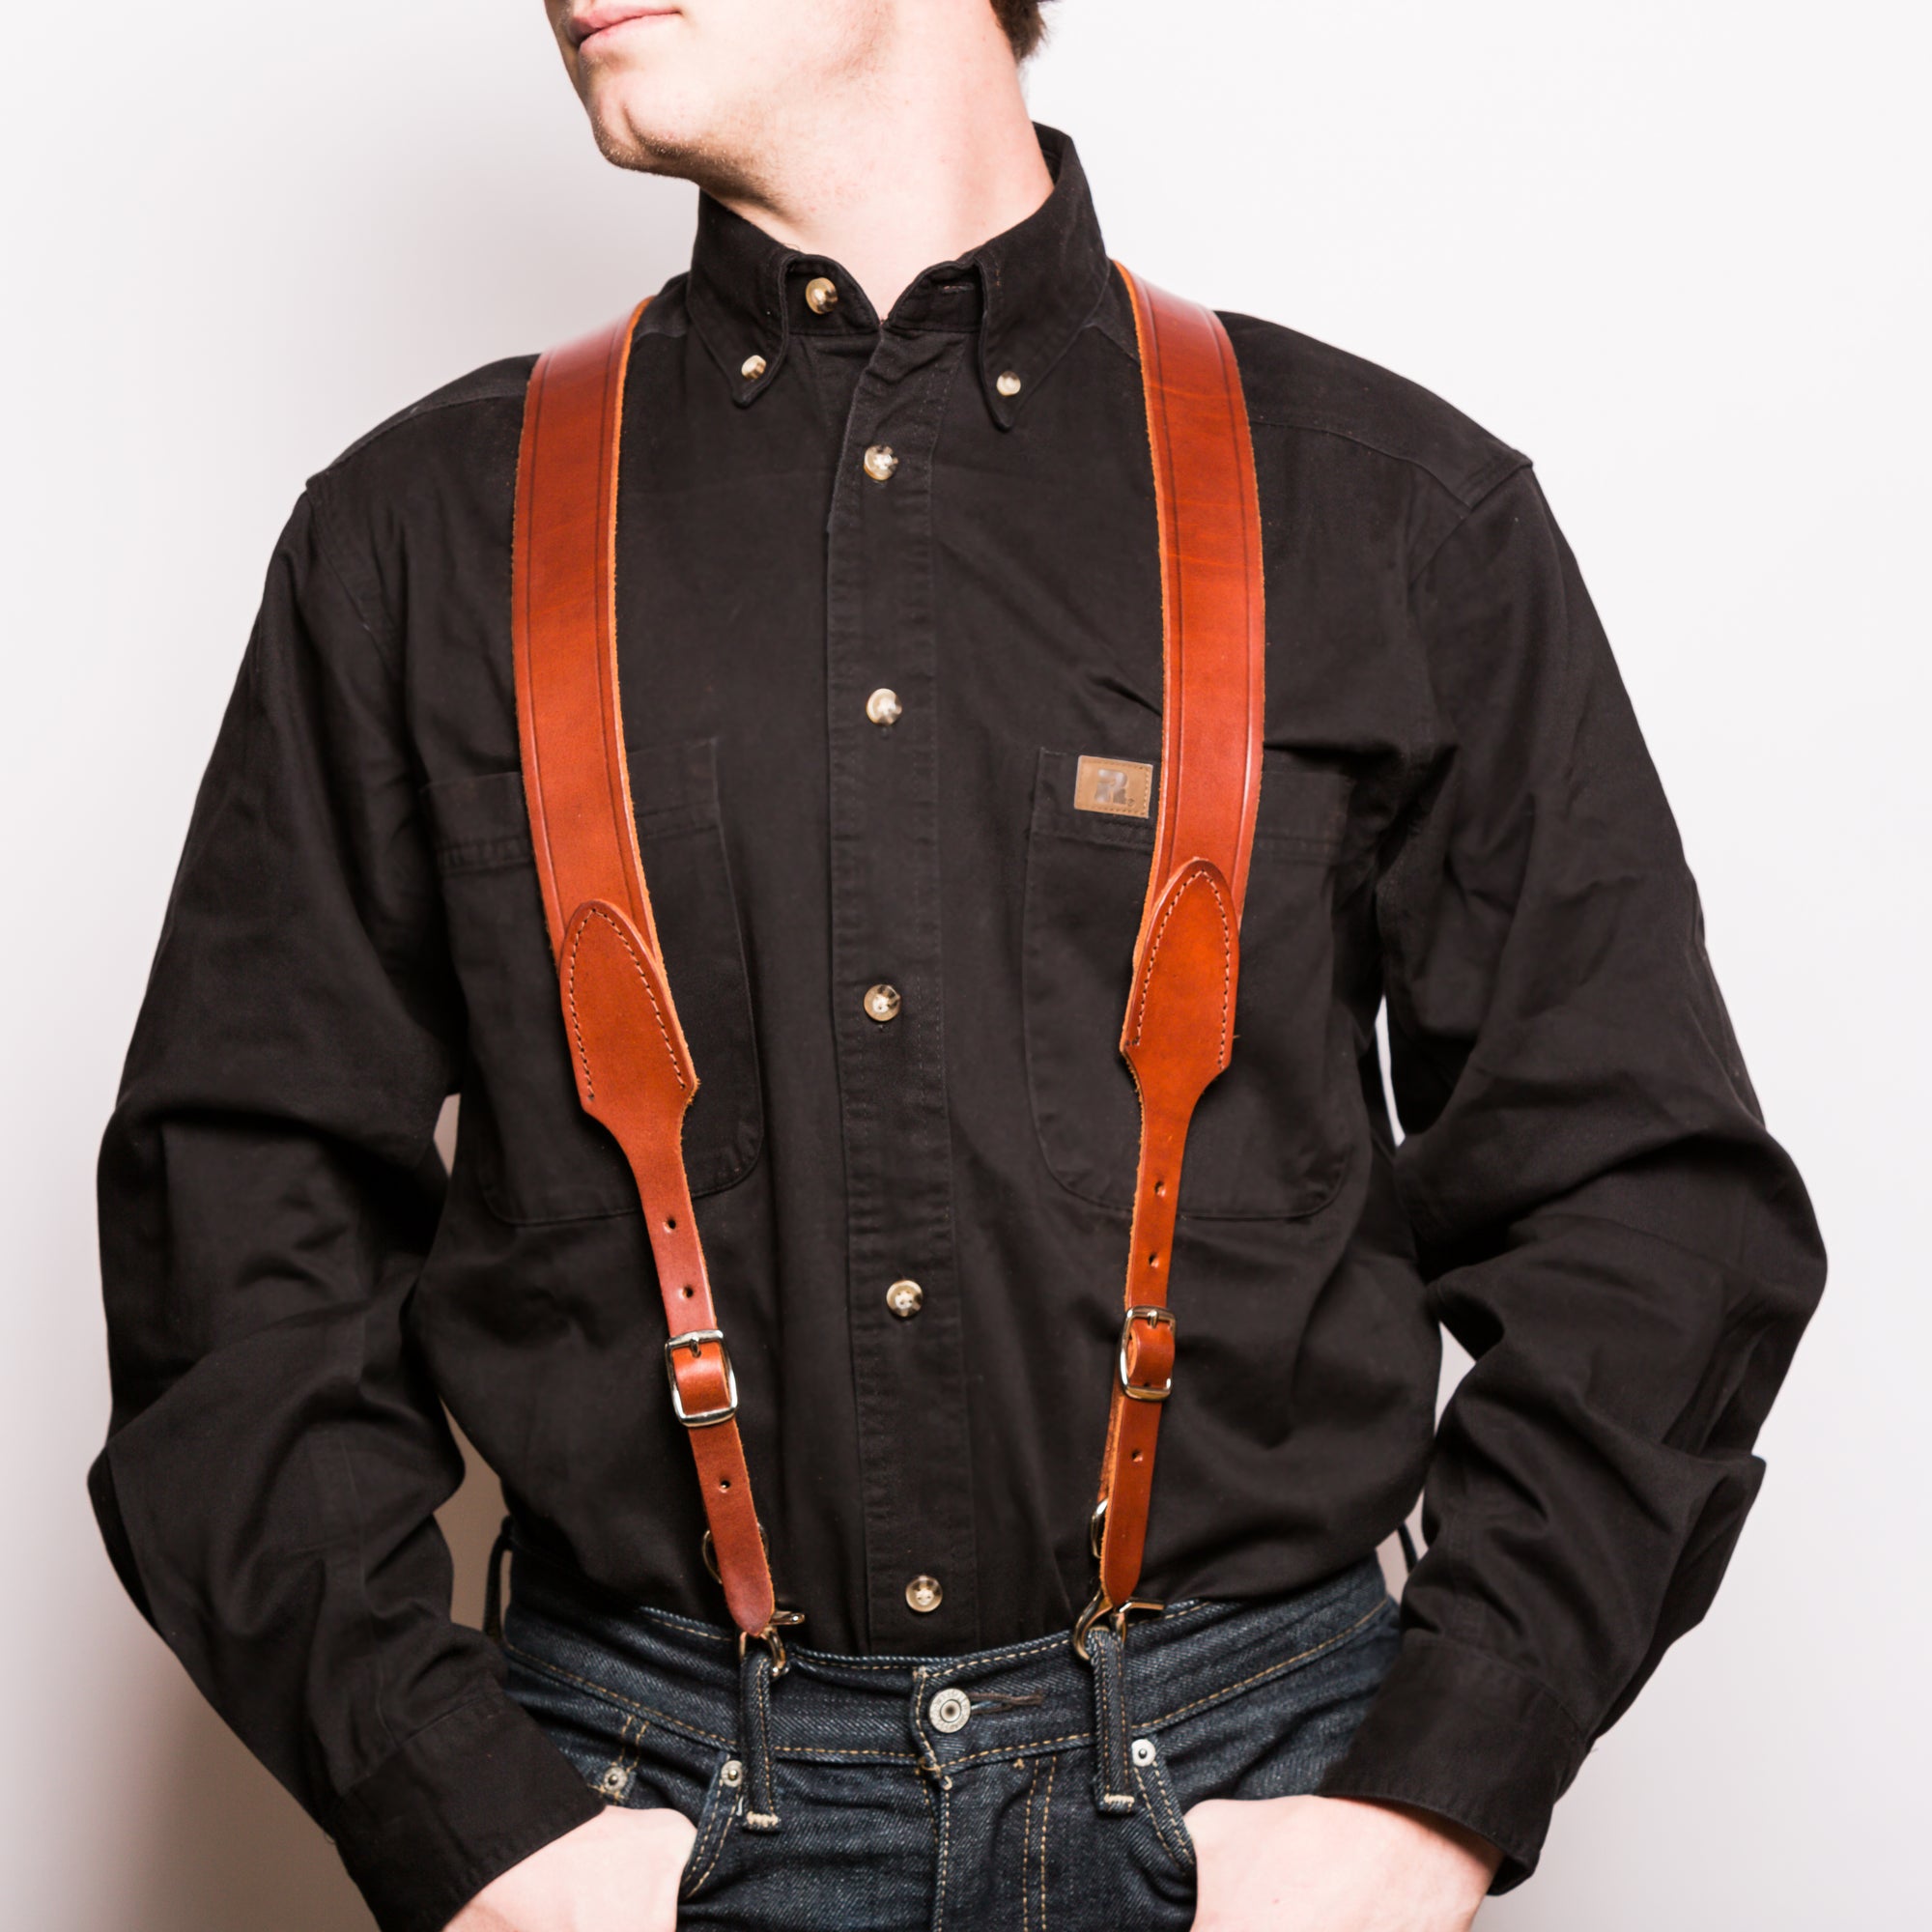 Leather Suspenders